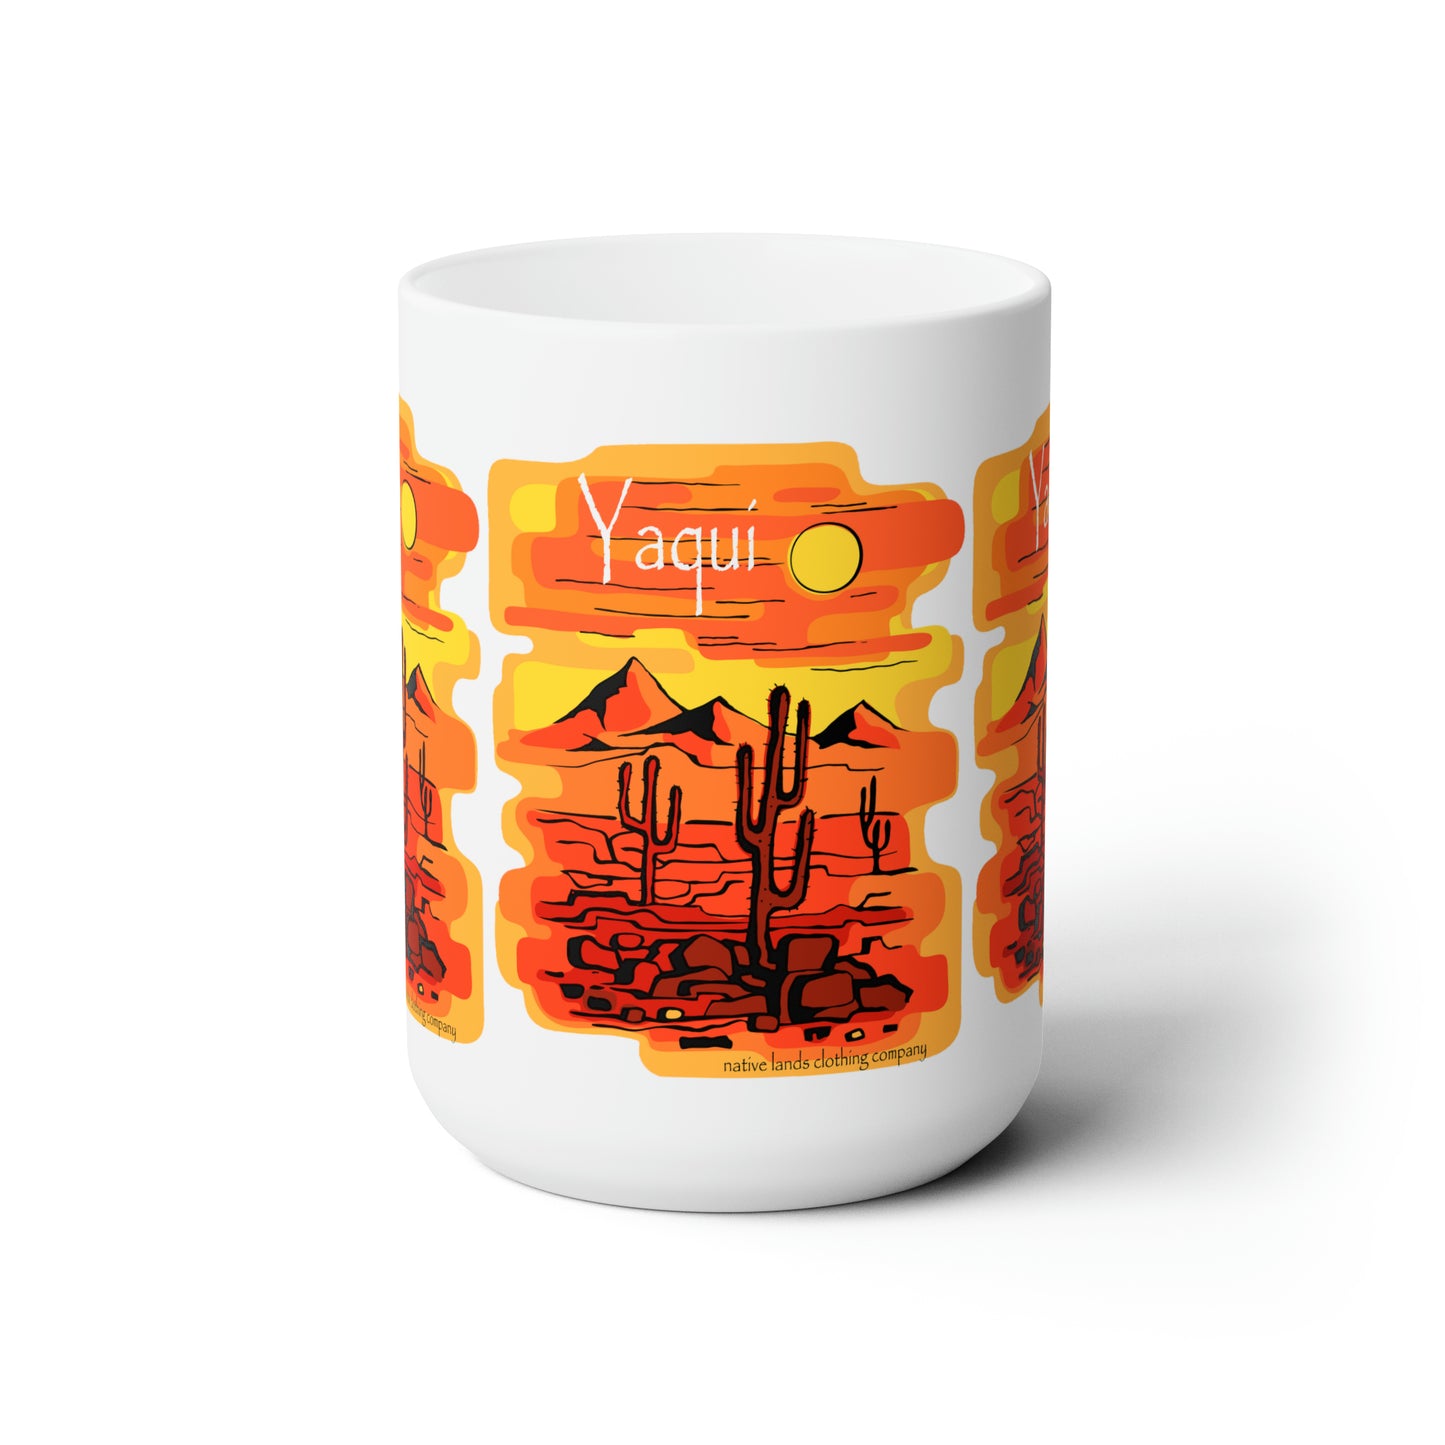 Yaqui Tribe Ceramic Mug 15 oz  - First Nations, Canadian Aboriginal, Indigenous, Native American